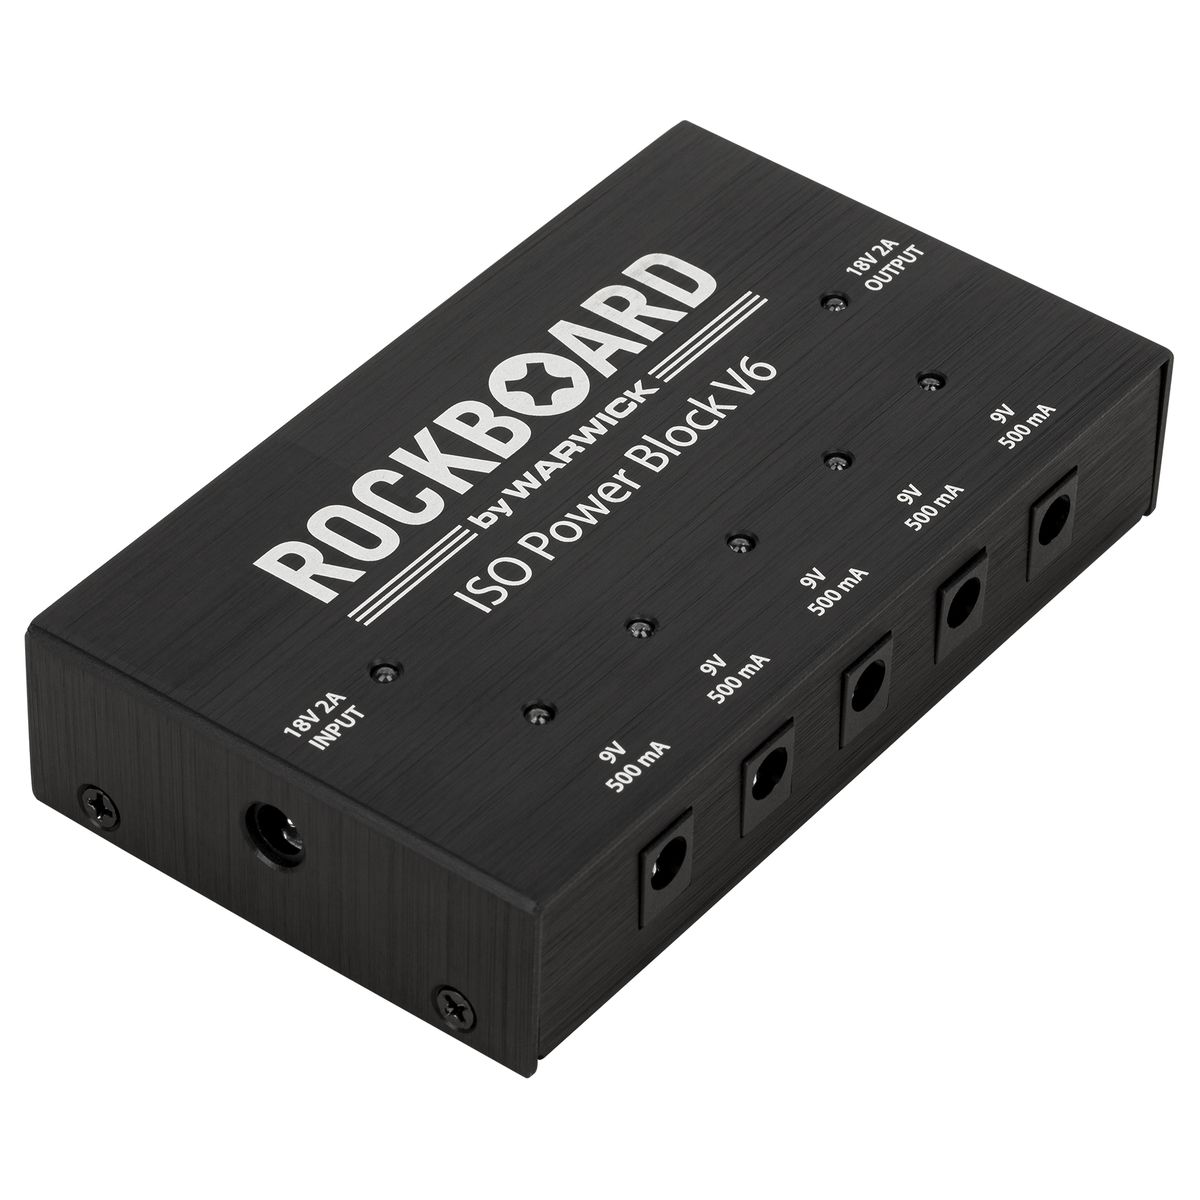 Прочие гитарные аксессуары Rockboard ISO Power Block V6 20 40khz frequency digital power generator circuit board for driver waterproof ultrasonic transducer